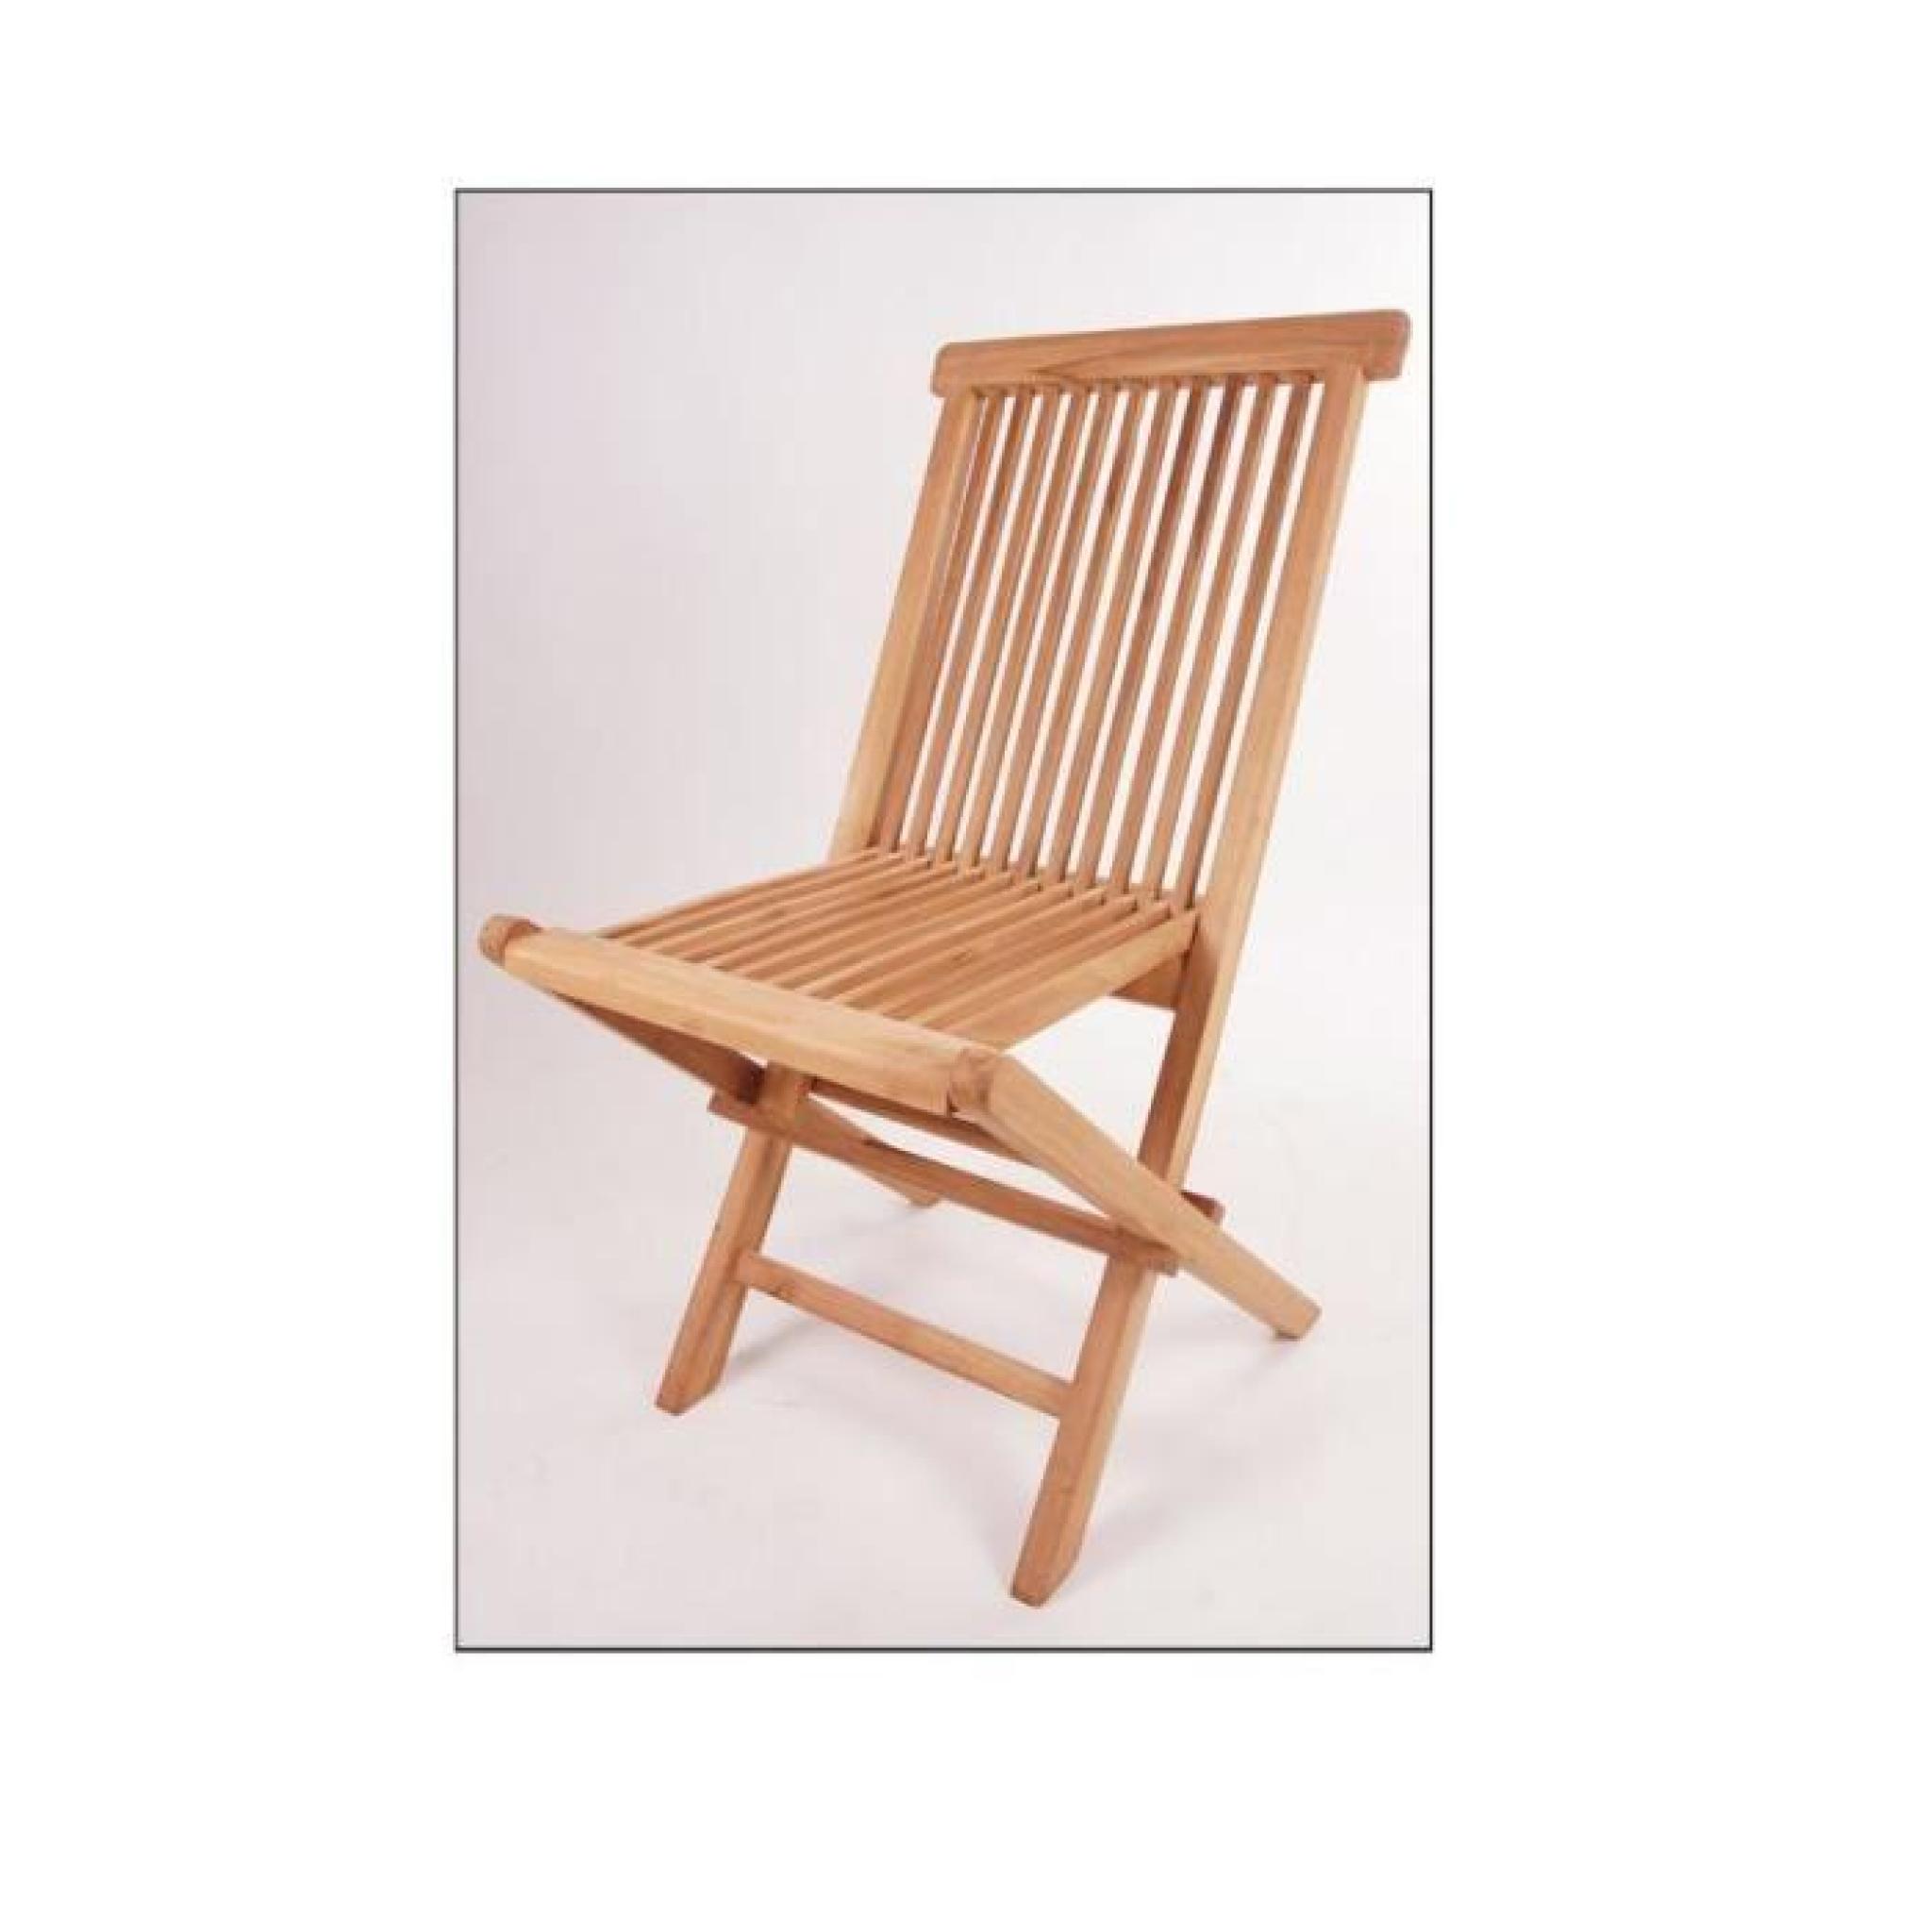 Spetebo - Massive chaise pliante En teck environ 90 cm x 50 cm x 50 cm